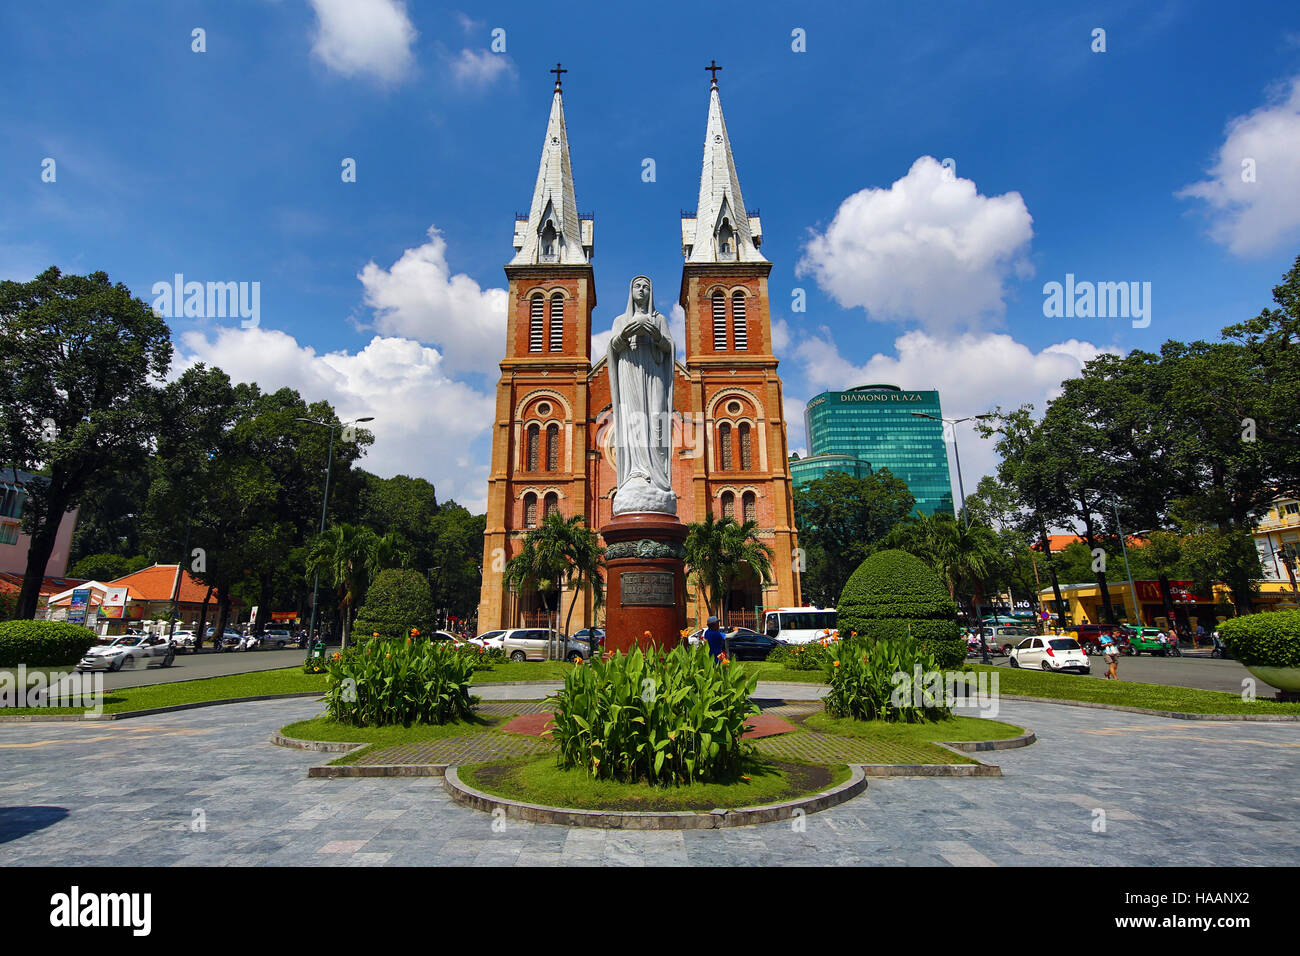 Statue of the Virgin Mary at the Notre-Dame Cathedral Basilica of Saigon, Ho Chi Minh City (Saigon), Vietnam Stock Photo